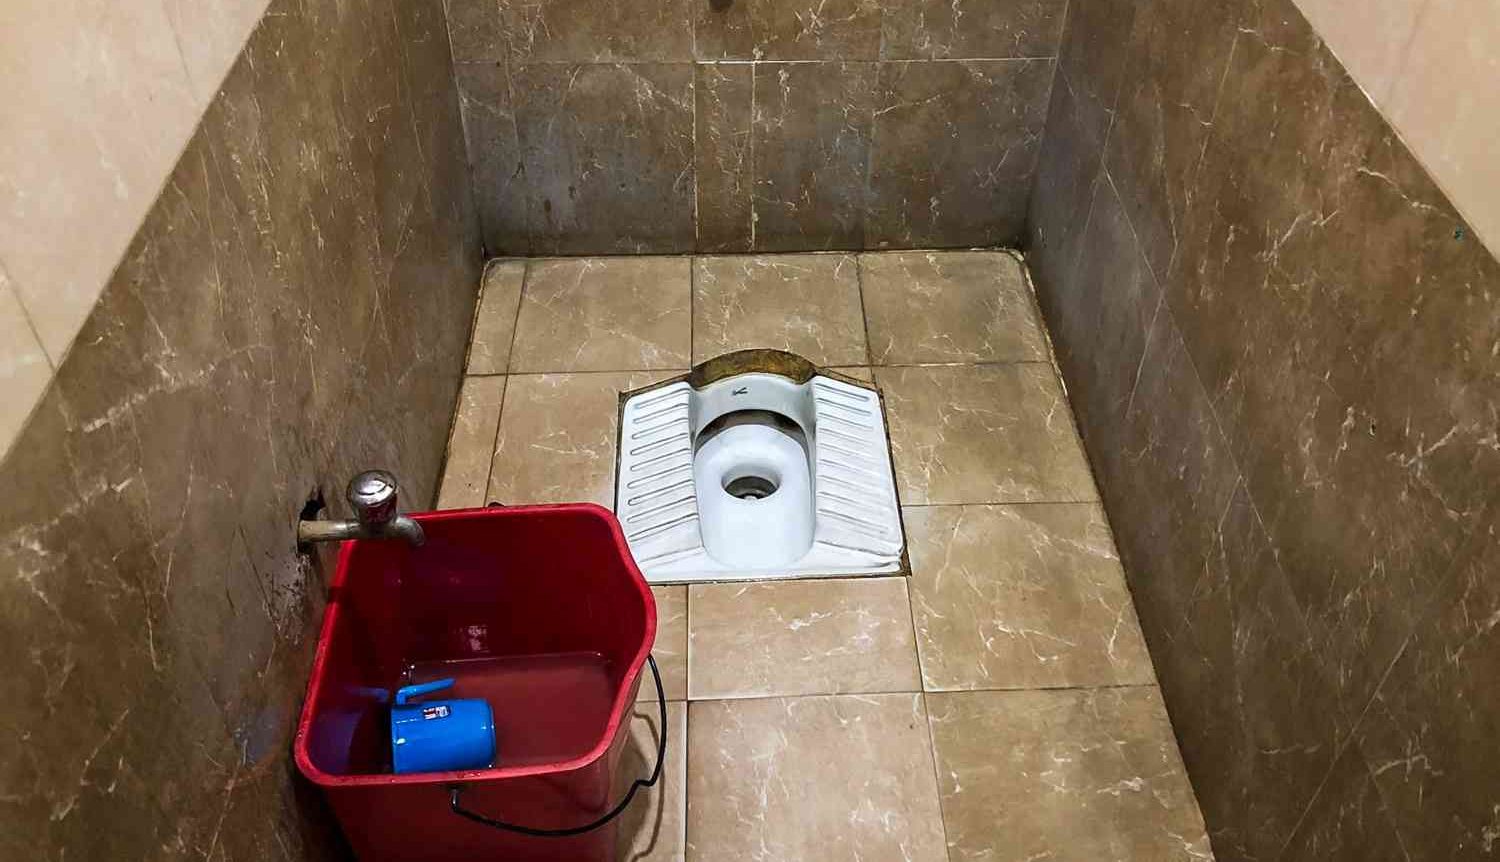 Squat pan toilet making noise